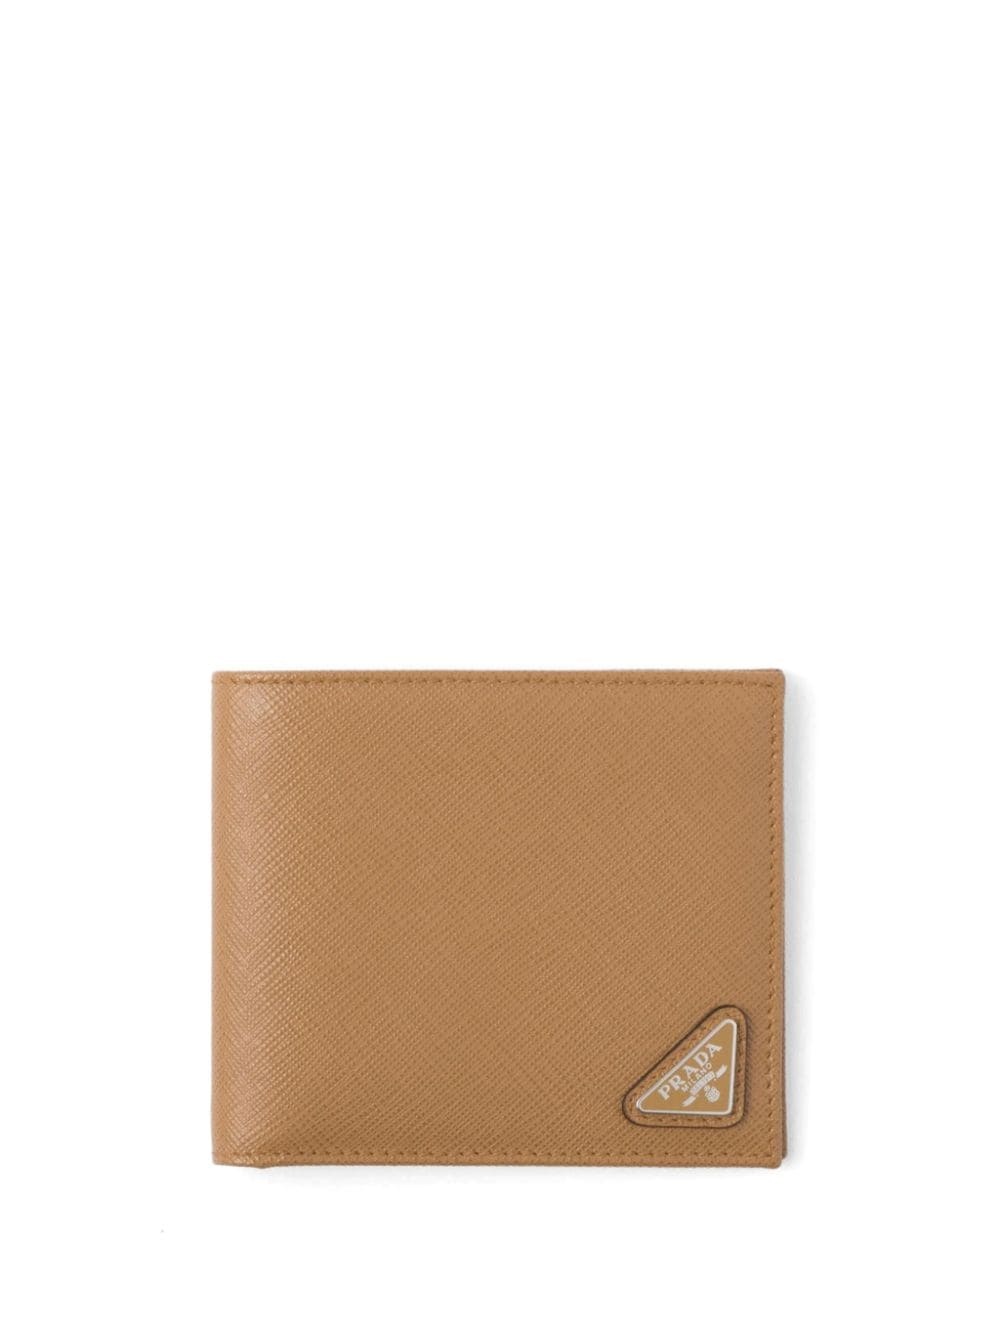 Saffiano leather bi-fold wallet - 1